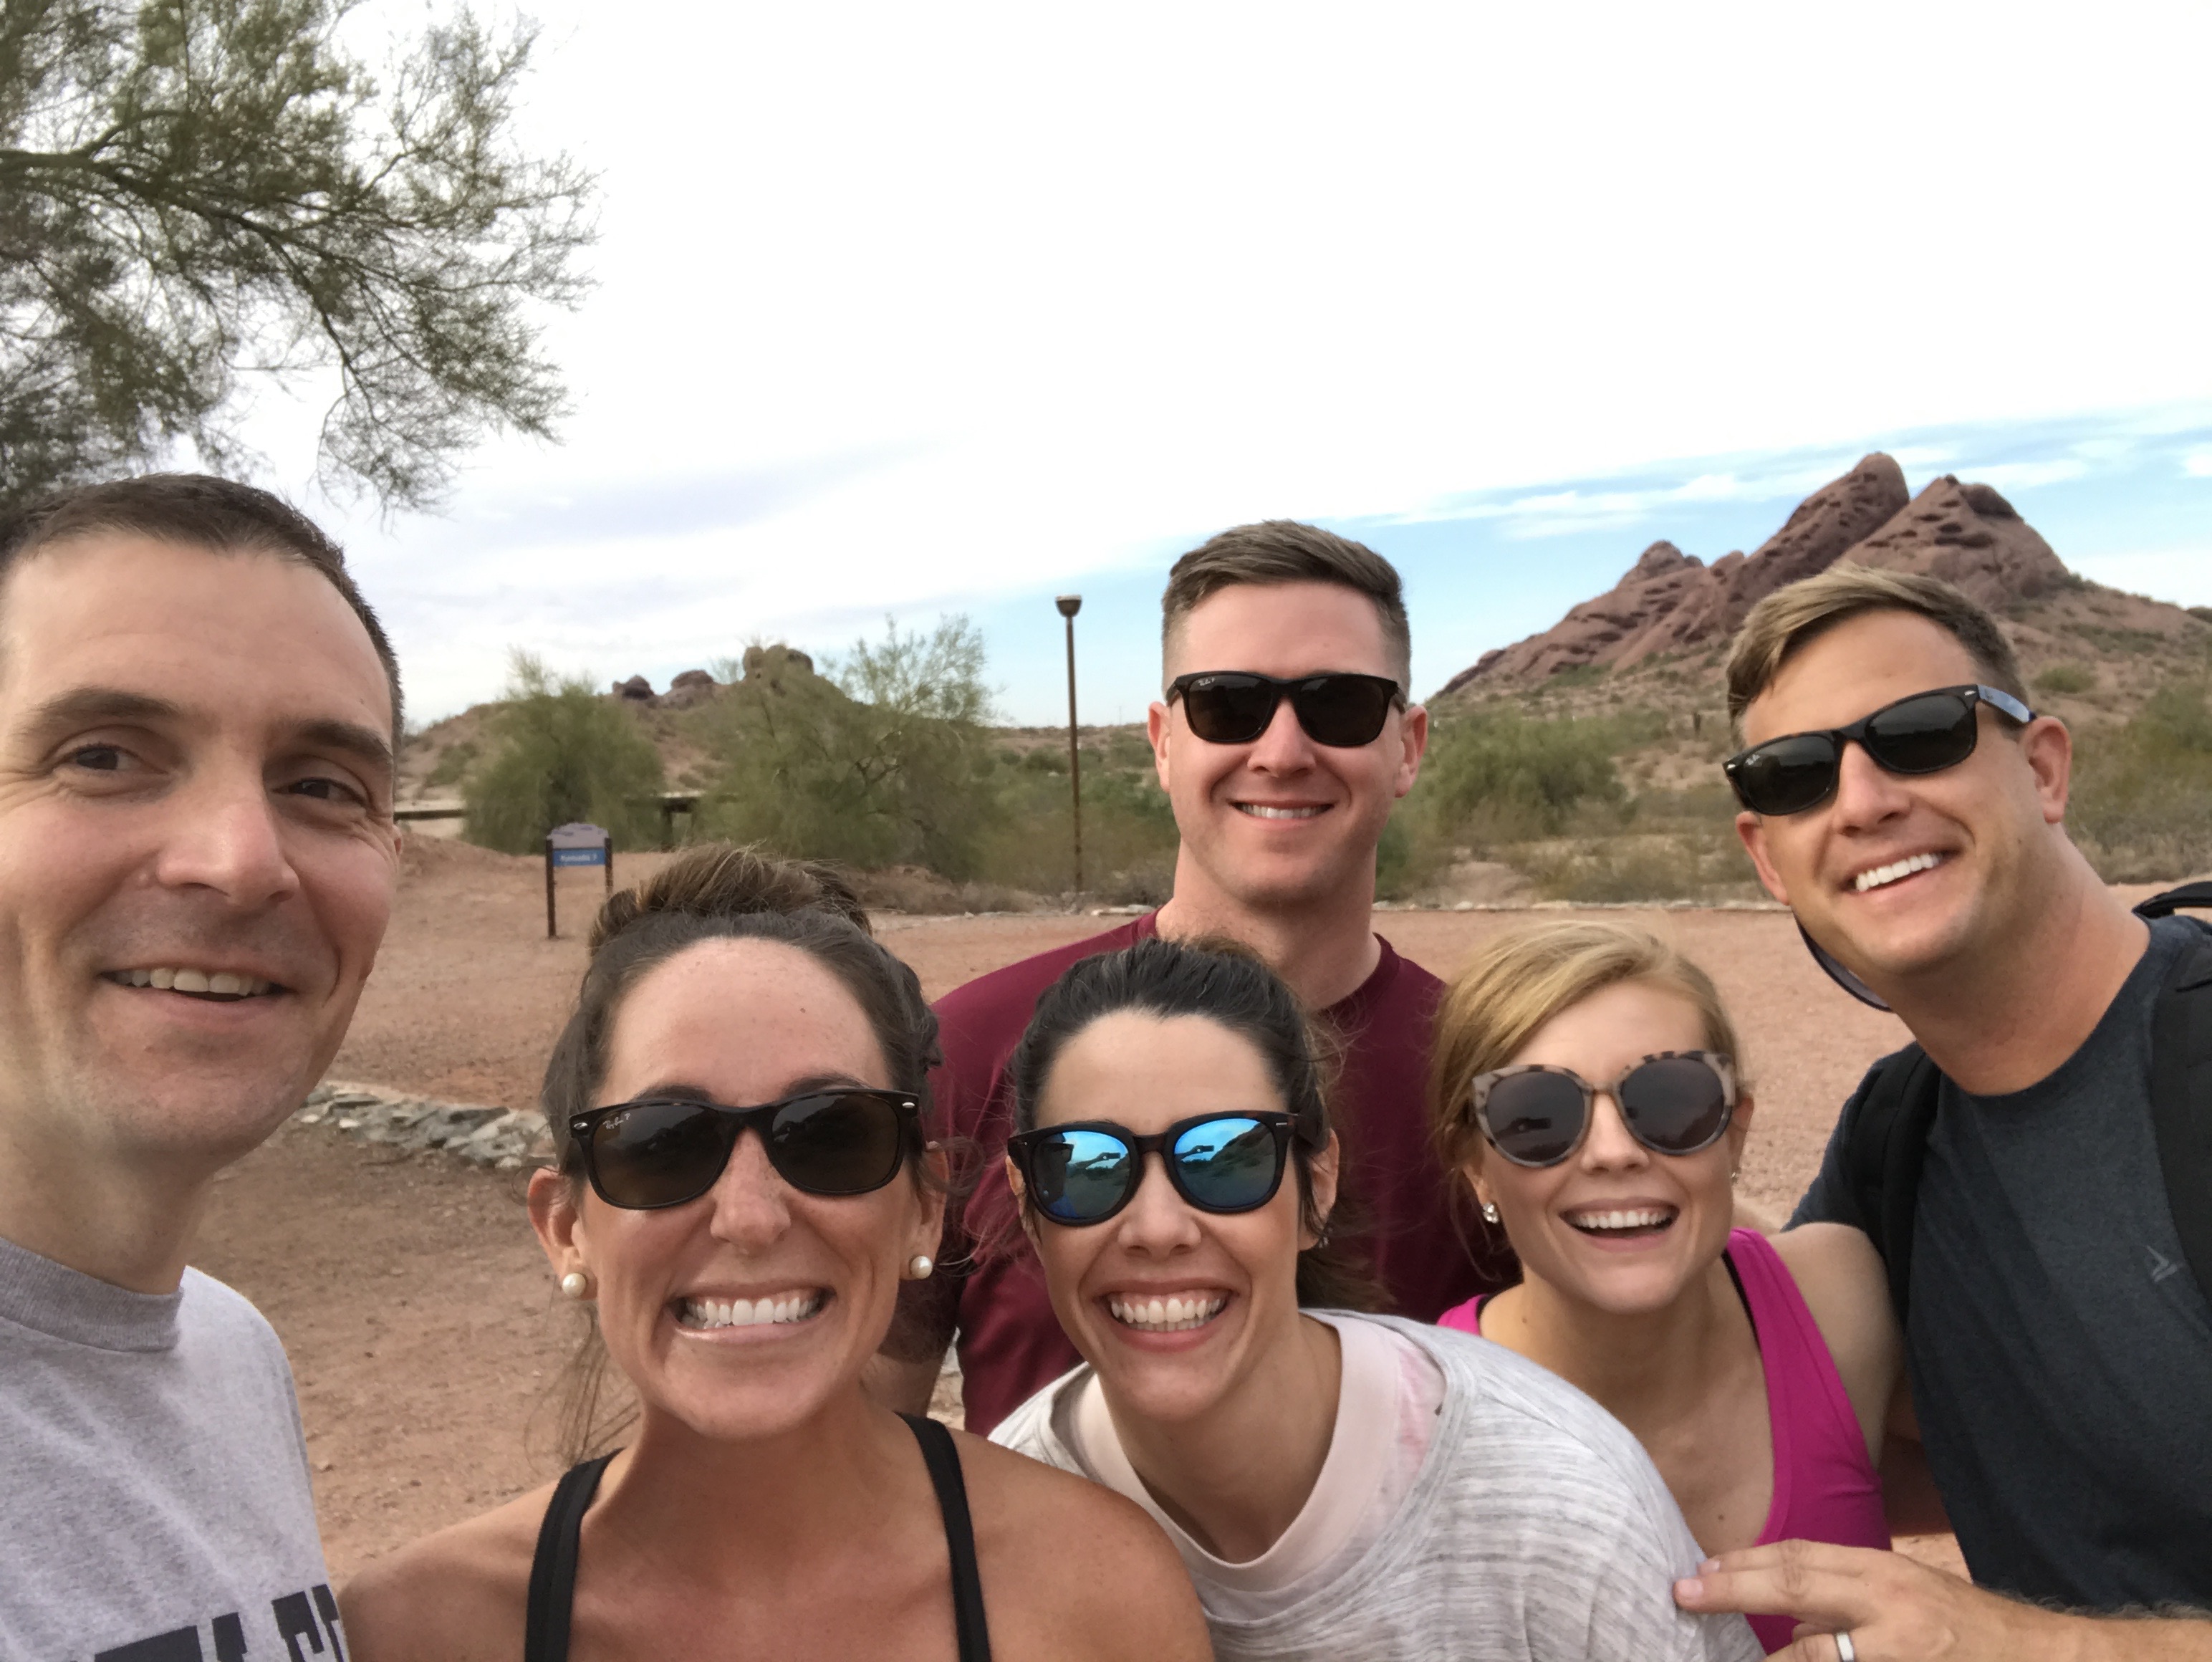 Papago Park - A Long Weekend In Scottsdale, Arizona - Travel In Arizona - Arizona To Do - Communikait by Kait Hanson